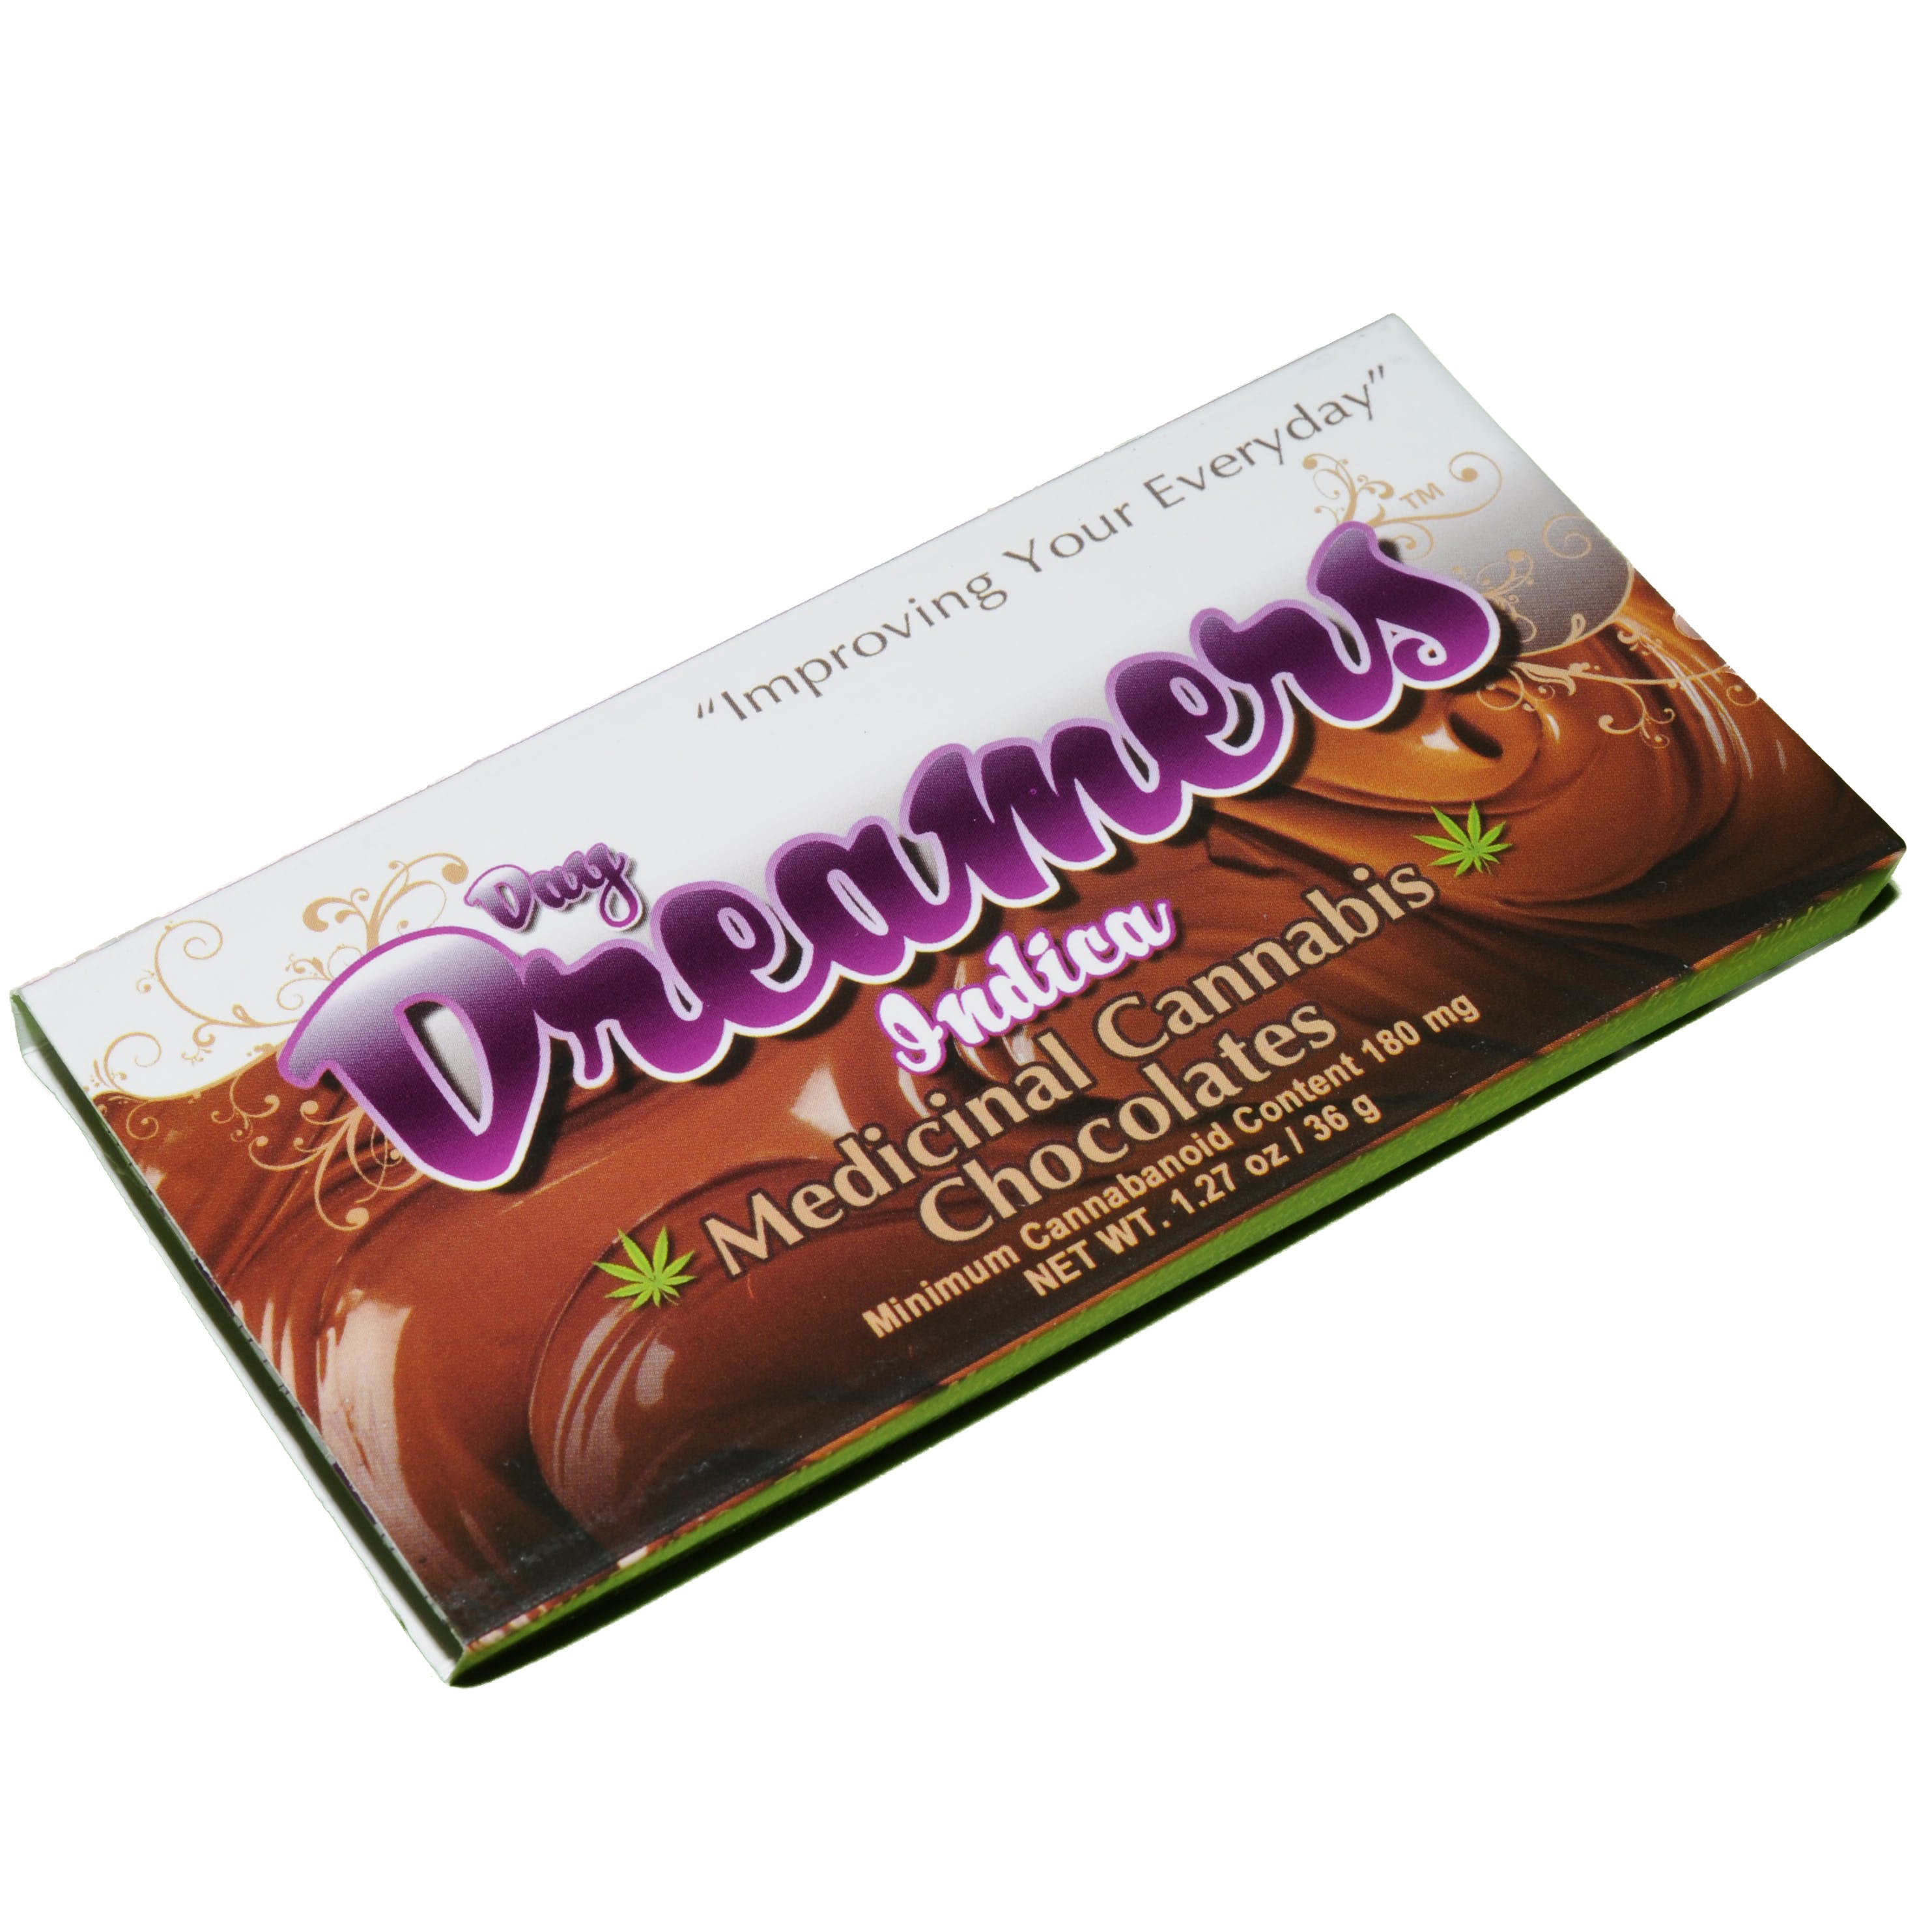 edible-day-dreamers-medicinal-cannabis-chocolates-indica